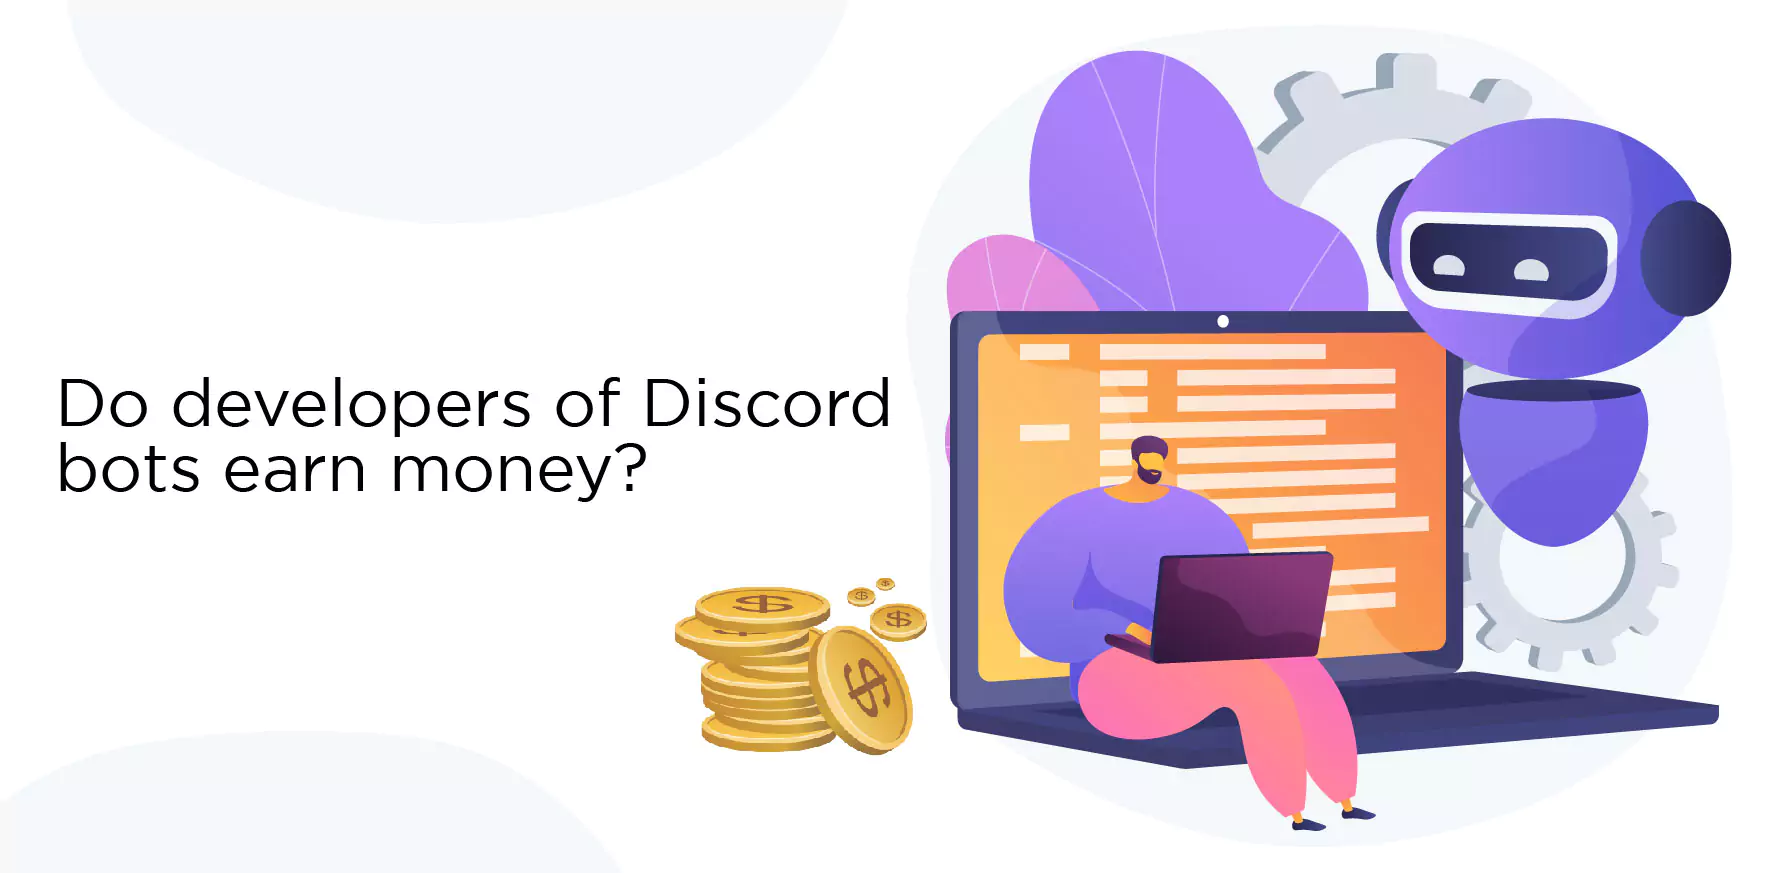 Do developers of Discord bots earn money?